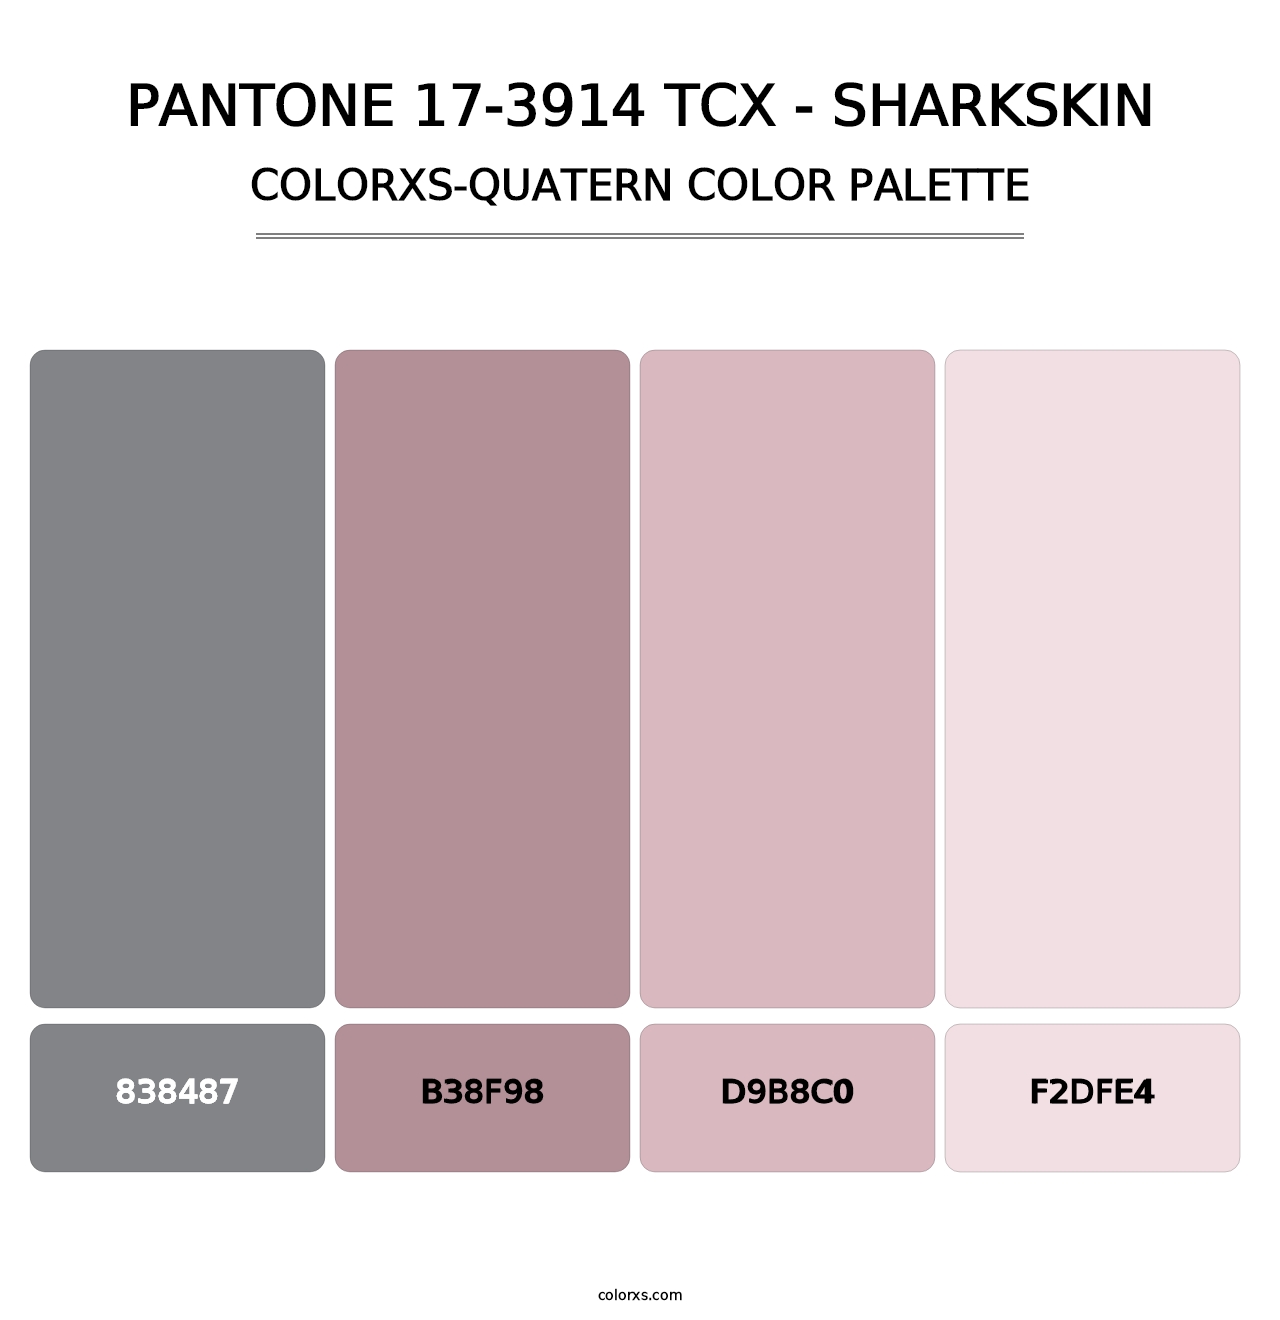 PANTONE 17-3914 TCX - Sharkskin - Colorxs Quatern Palette